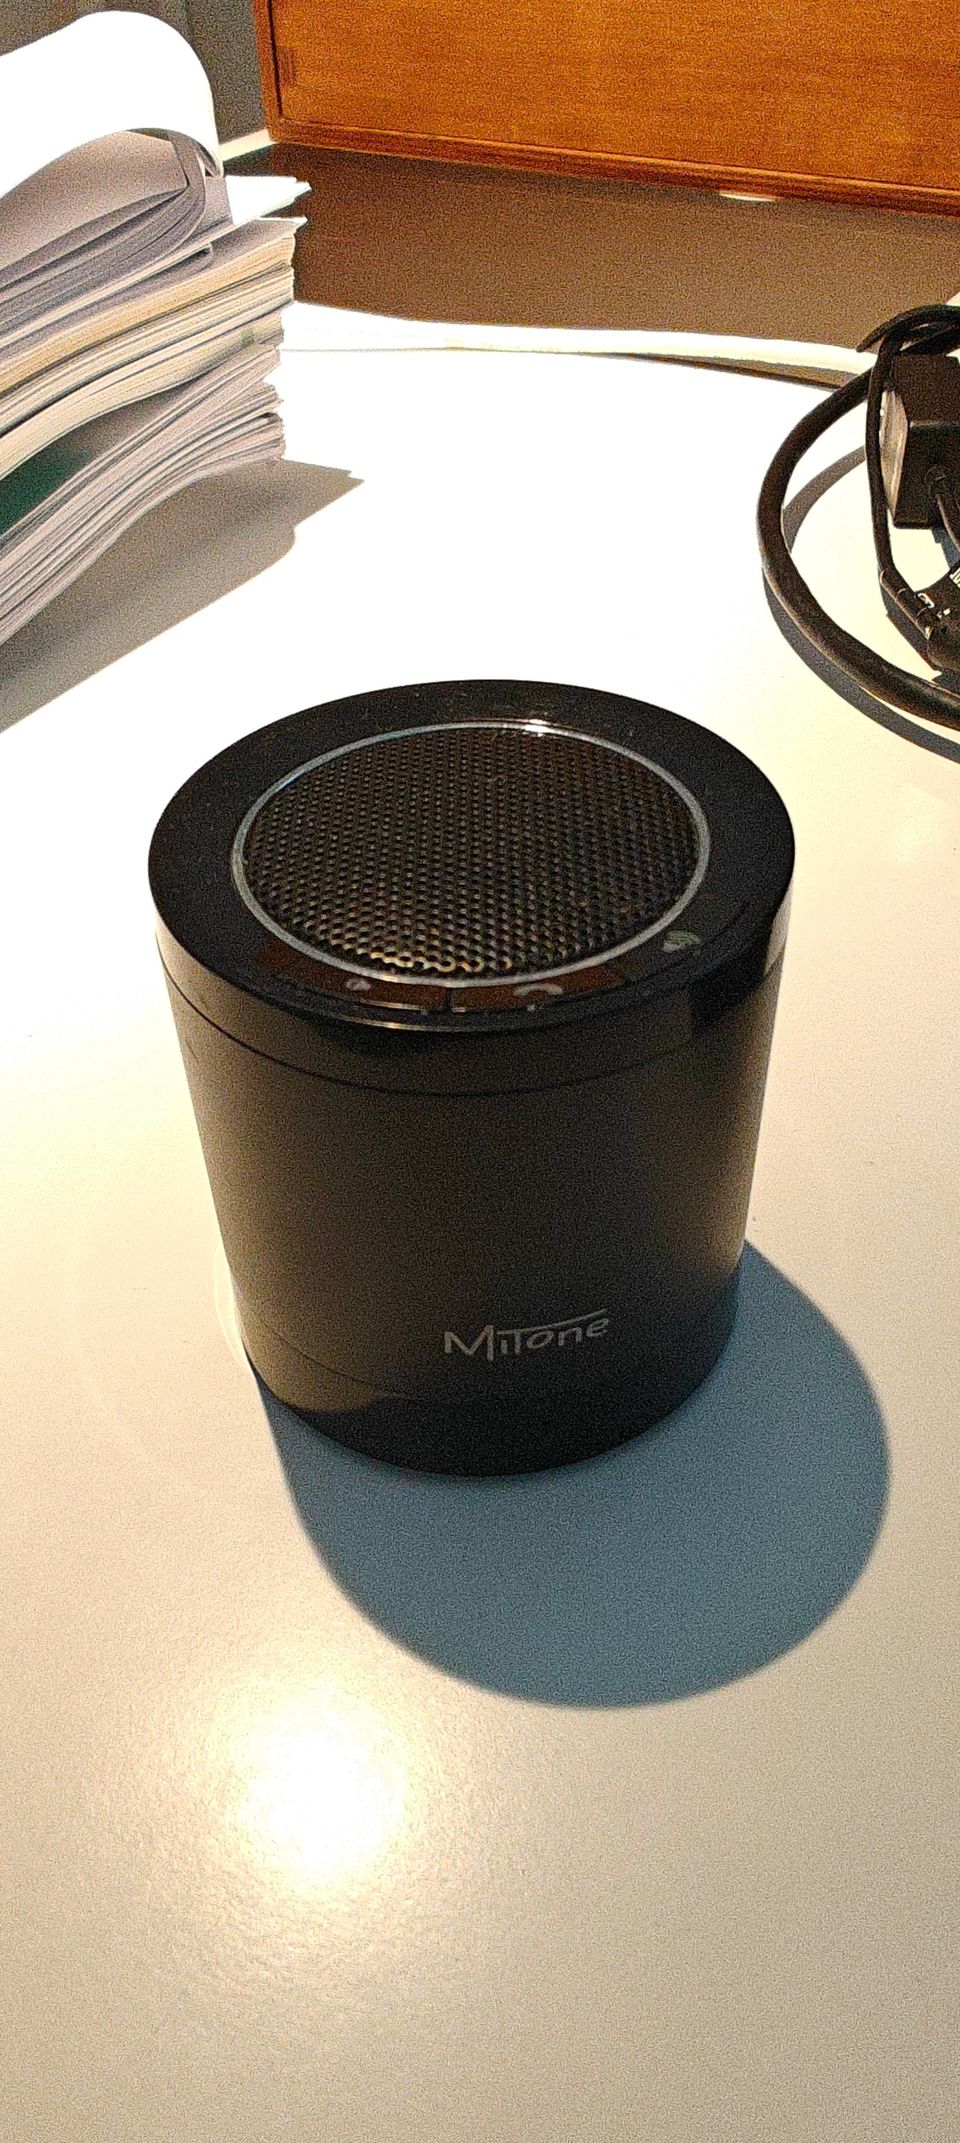 MiTone bluetooth speaker